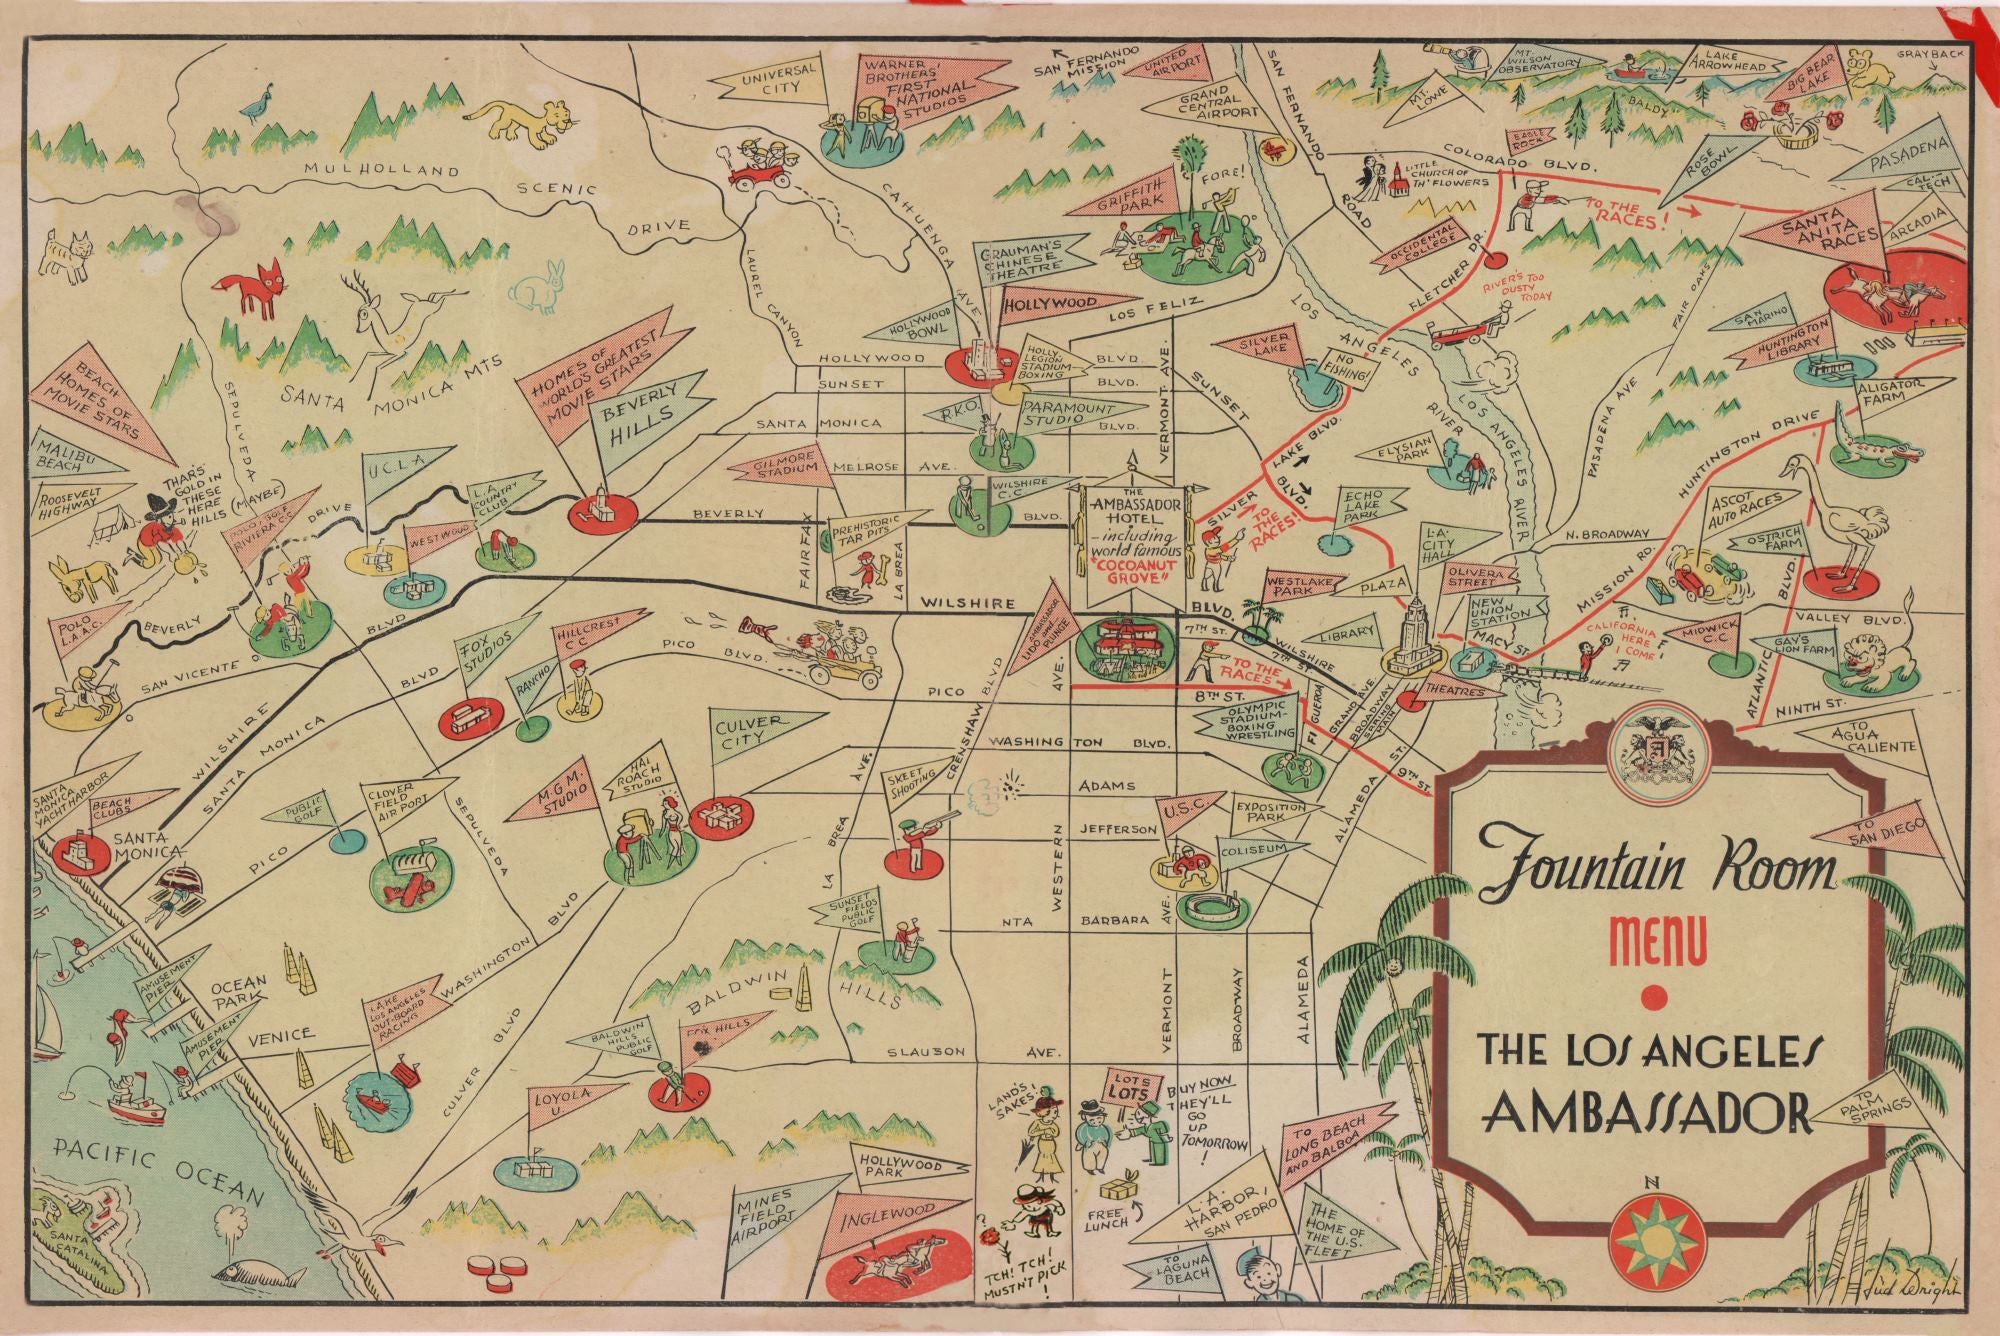 Hotel Ambassador, Los Angeles Map 1946